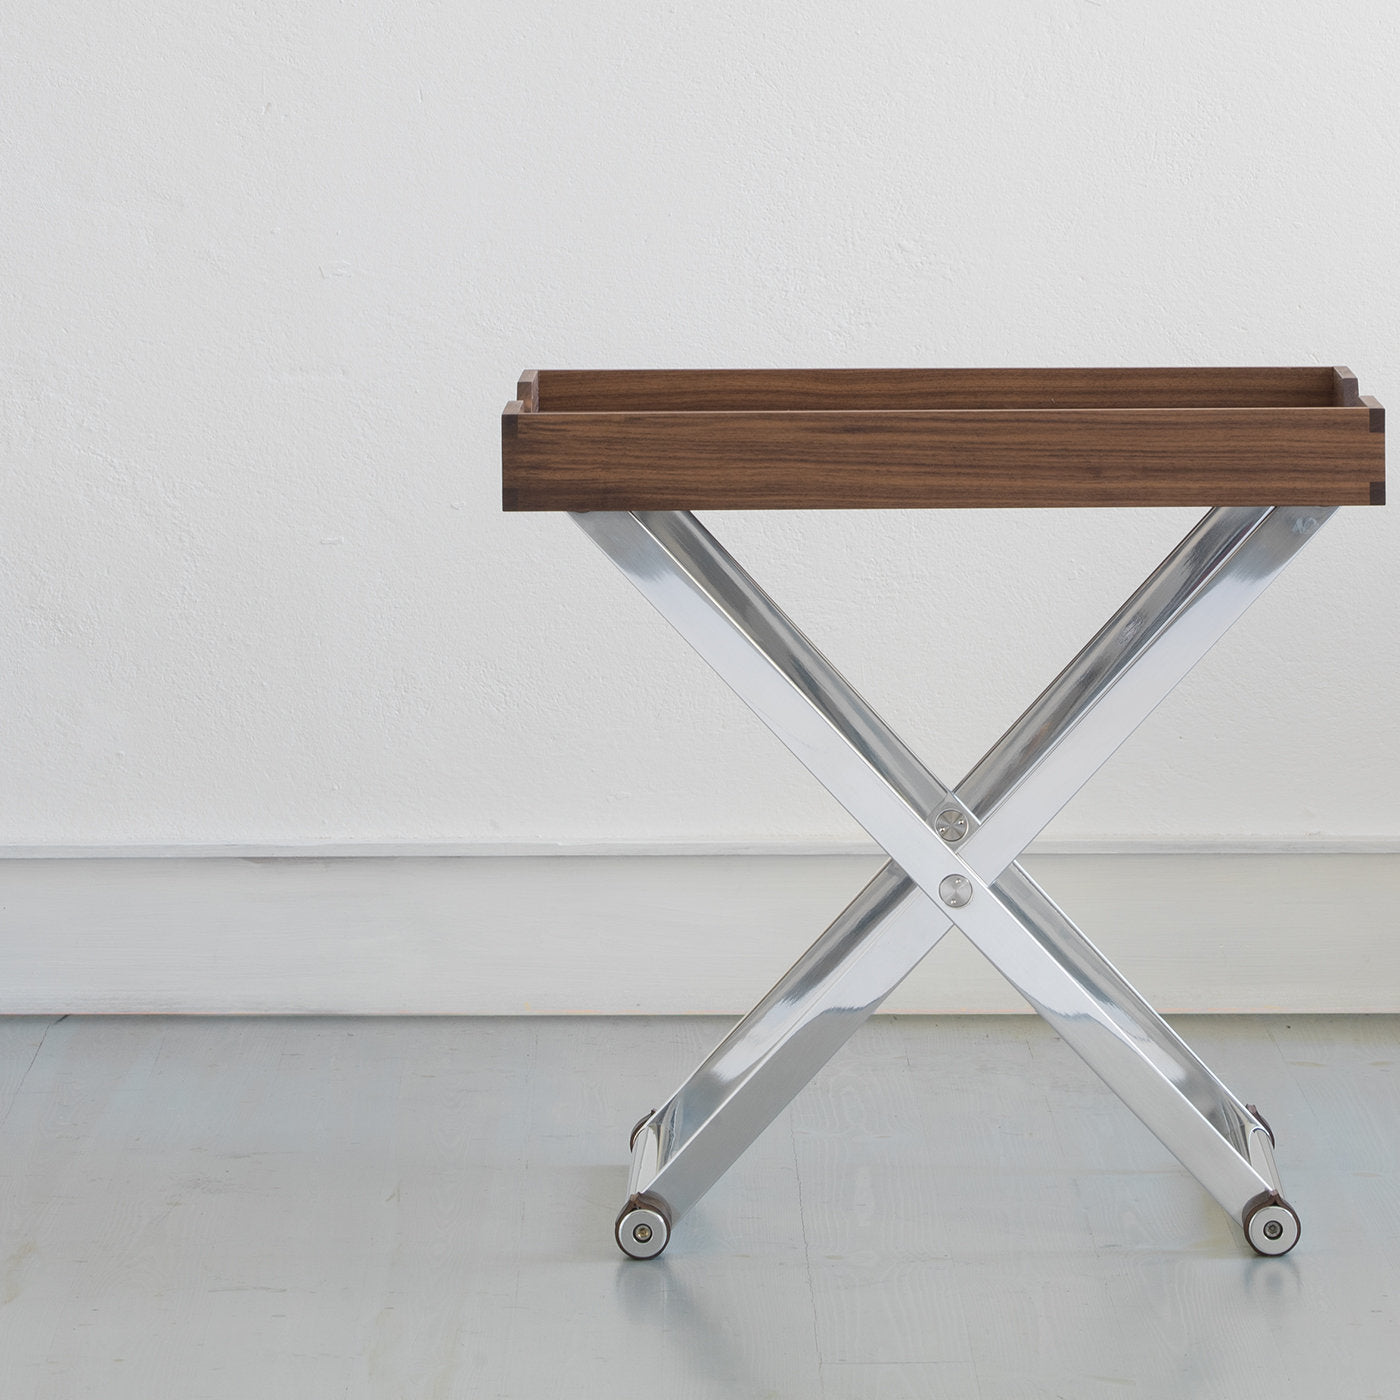 Andrea Foldable Table by Enrico Tonucci - Alternative view 1